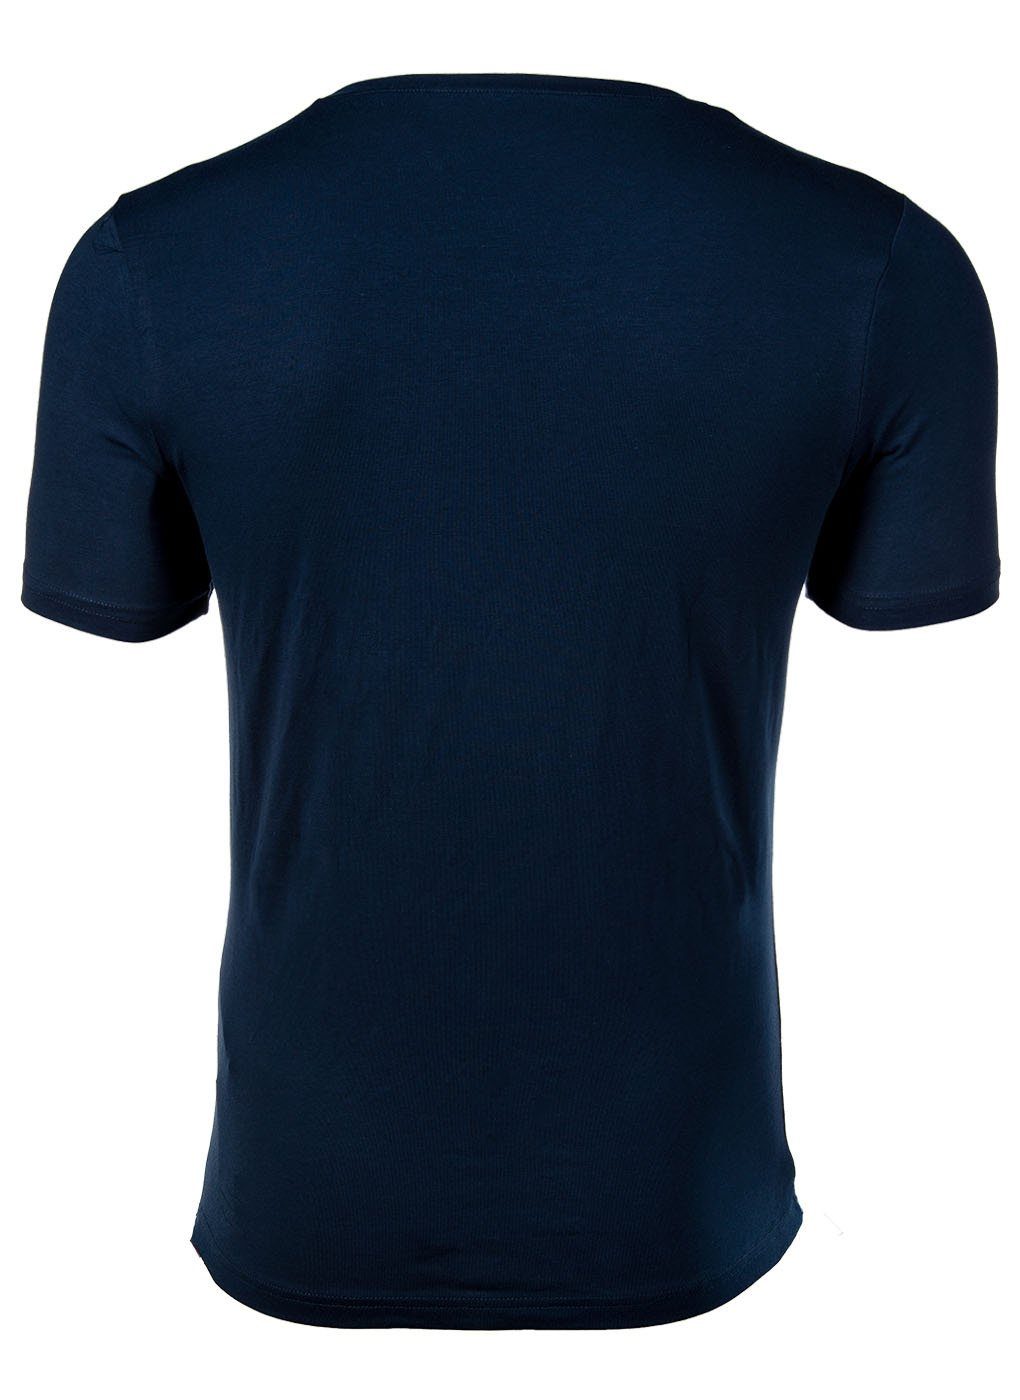 Fila Unterhemd Herren Unterhemd - Jersey Single V-Ausschnitt, Blau